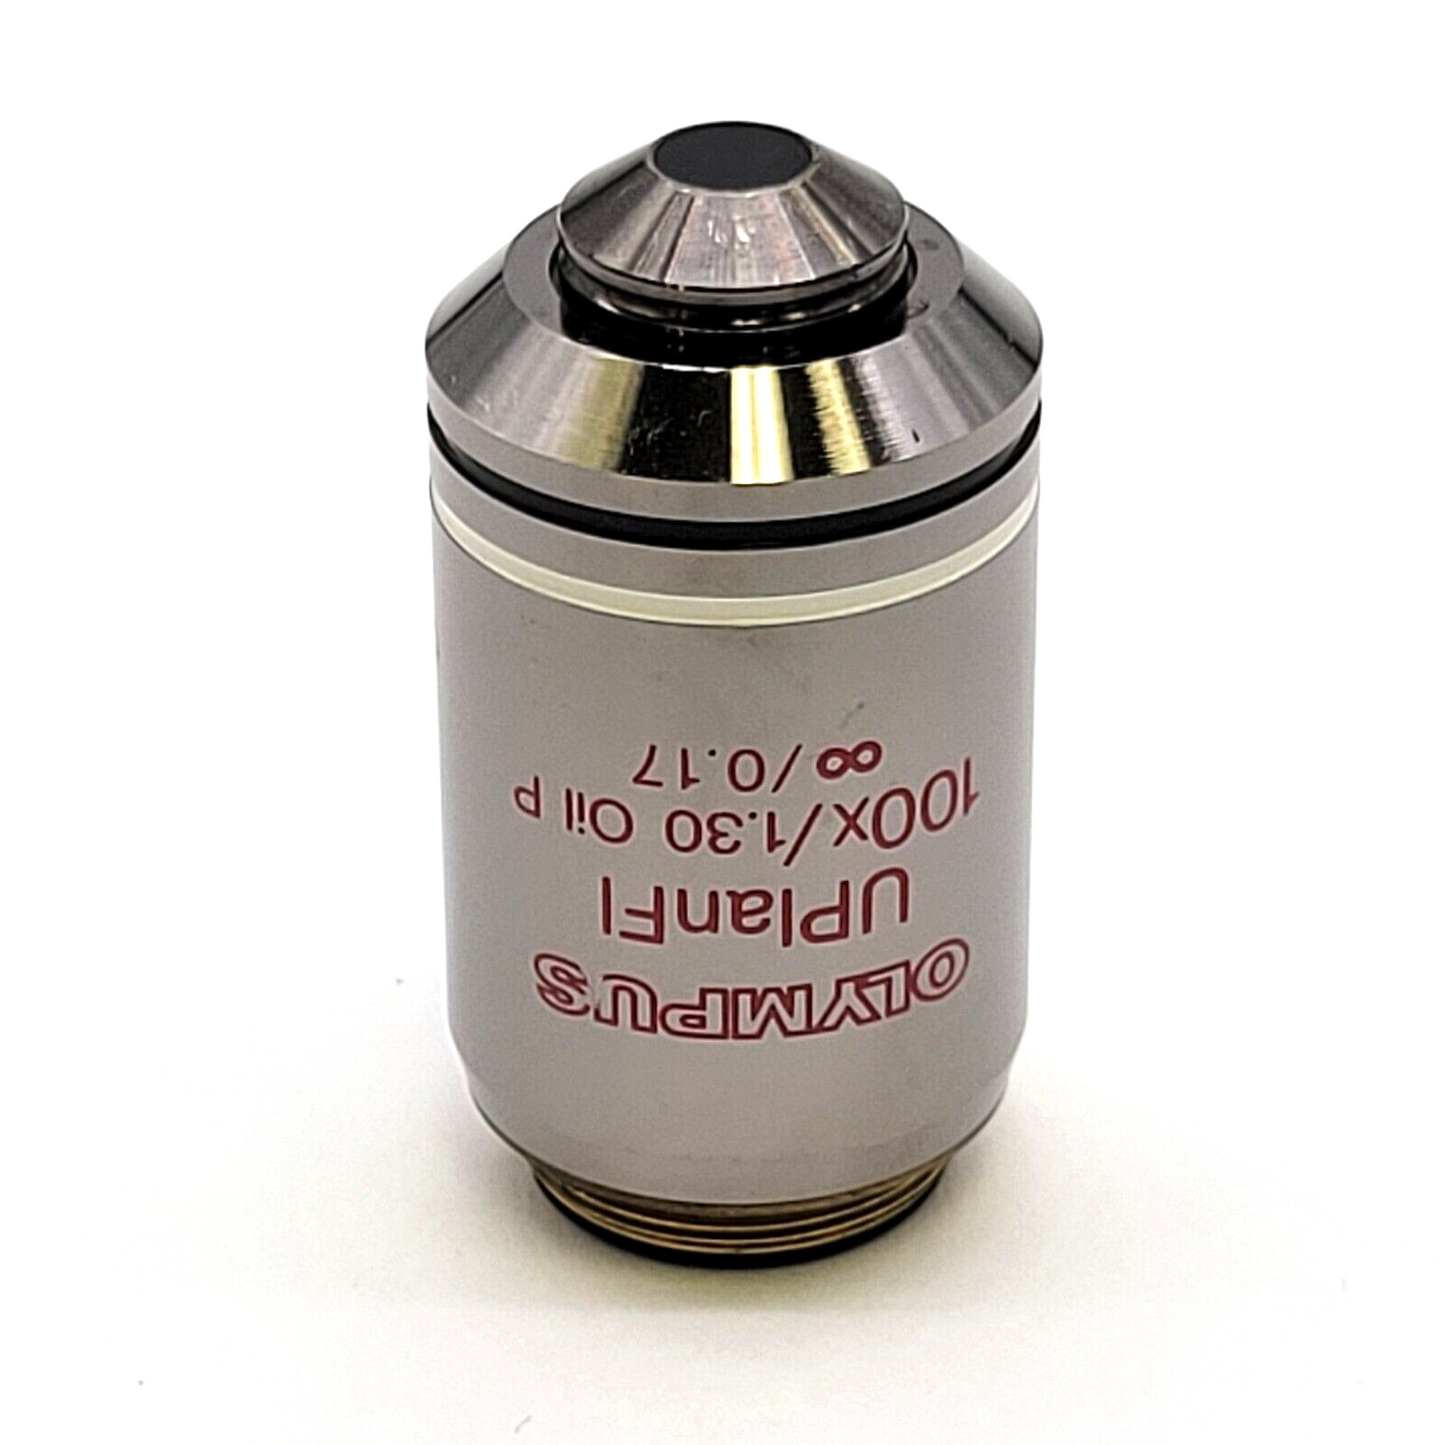 Olympus Microscope UplanFL 100X Oil Pol Objective - microscopemarketplace